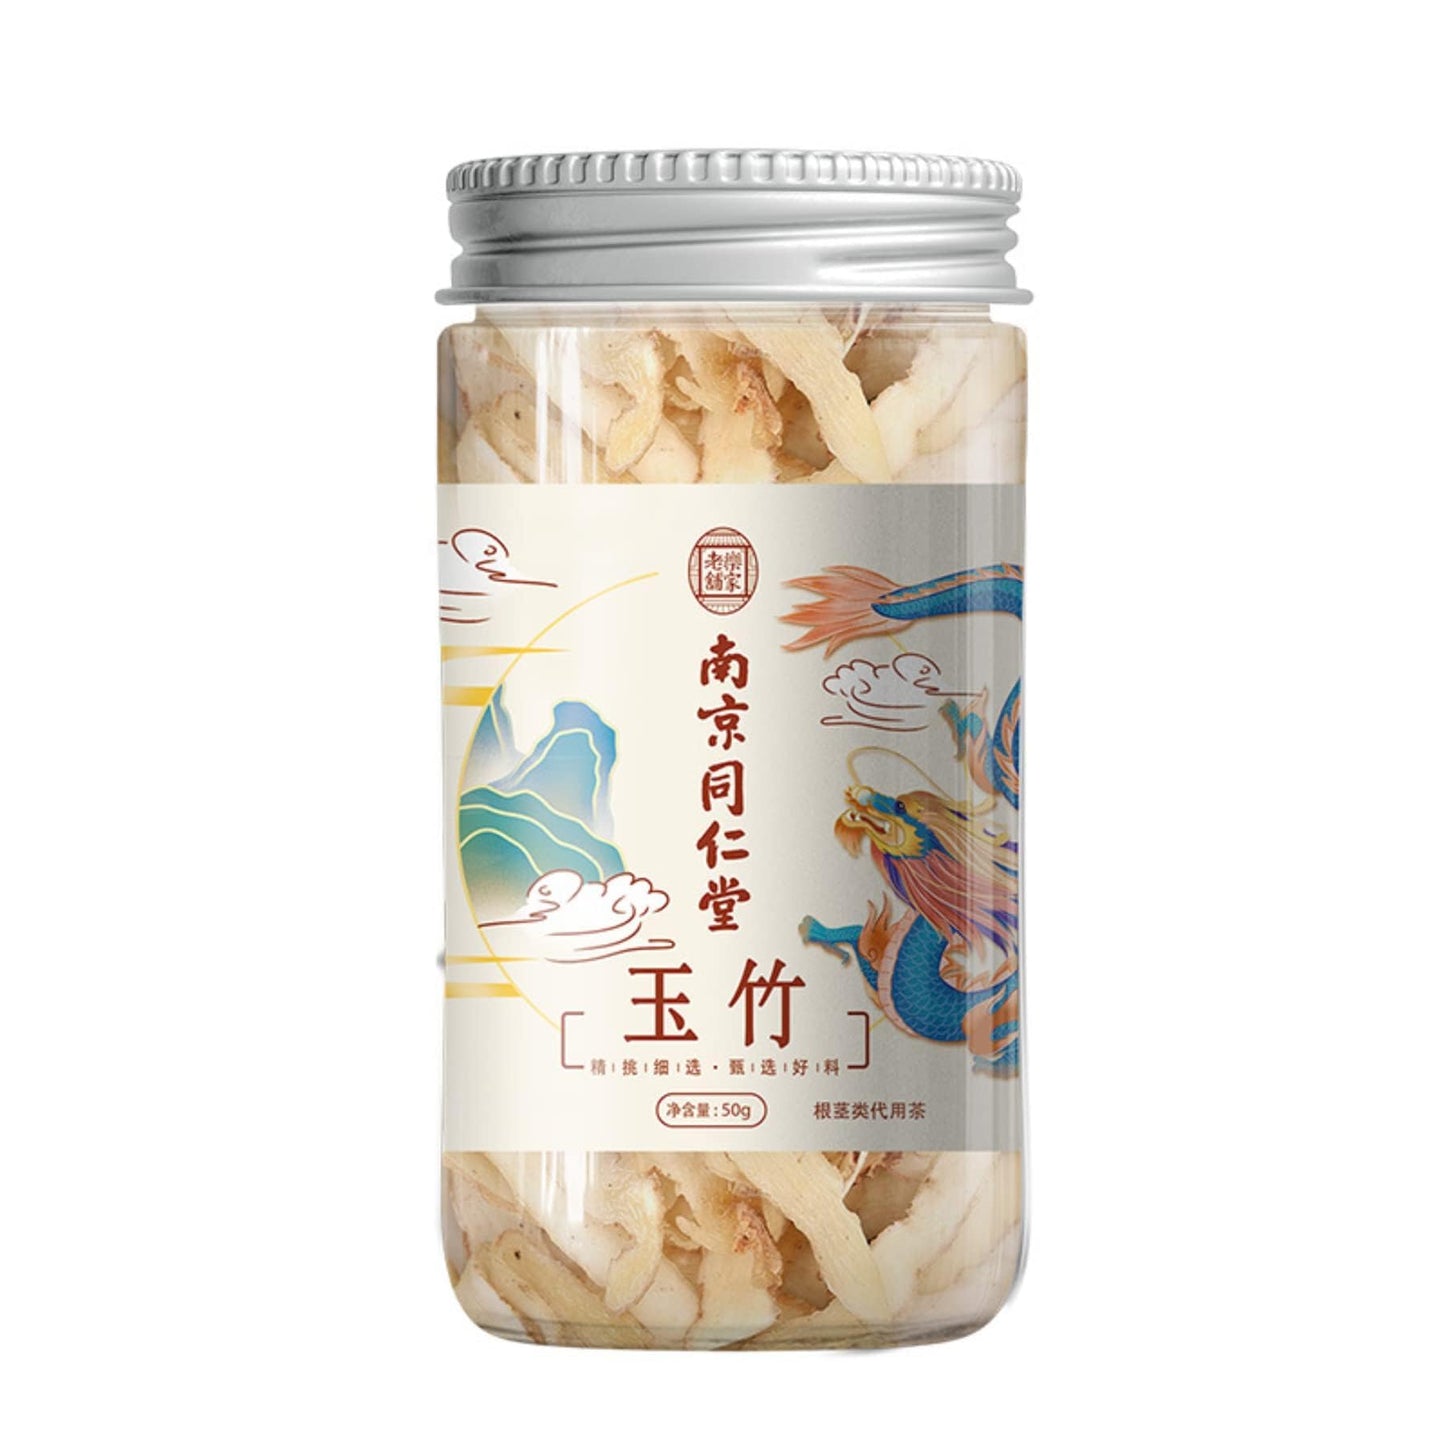 Chinese Herbal Tea Dried 50g (1.76oz) Natural Healthy Polygonatum Odoratum Yuzhu Herbals Sulfur Free Dry Canned 南京同仁堂玉竹